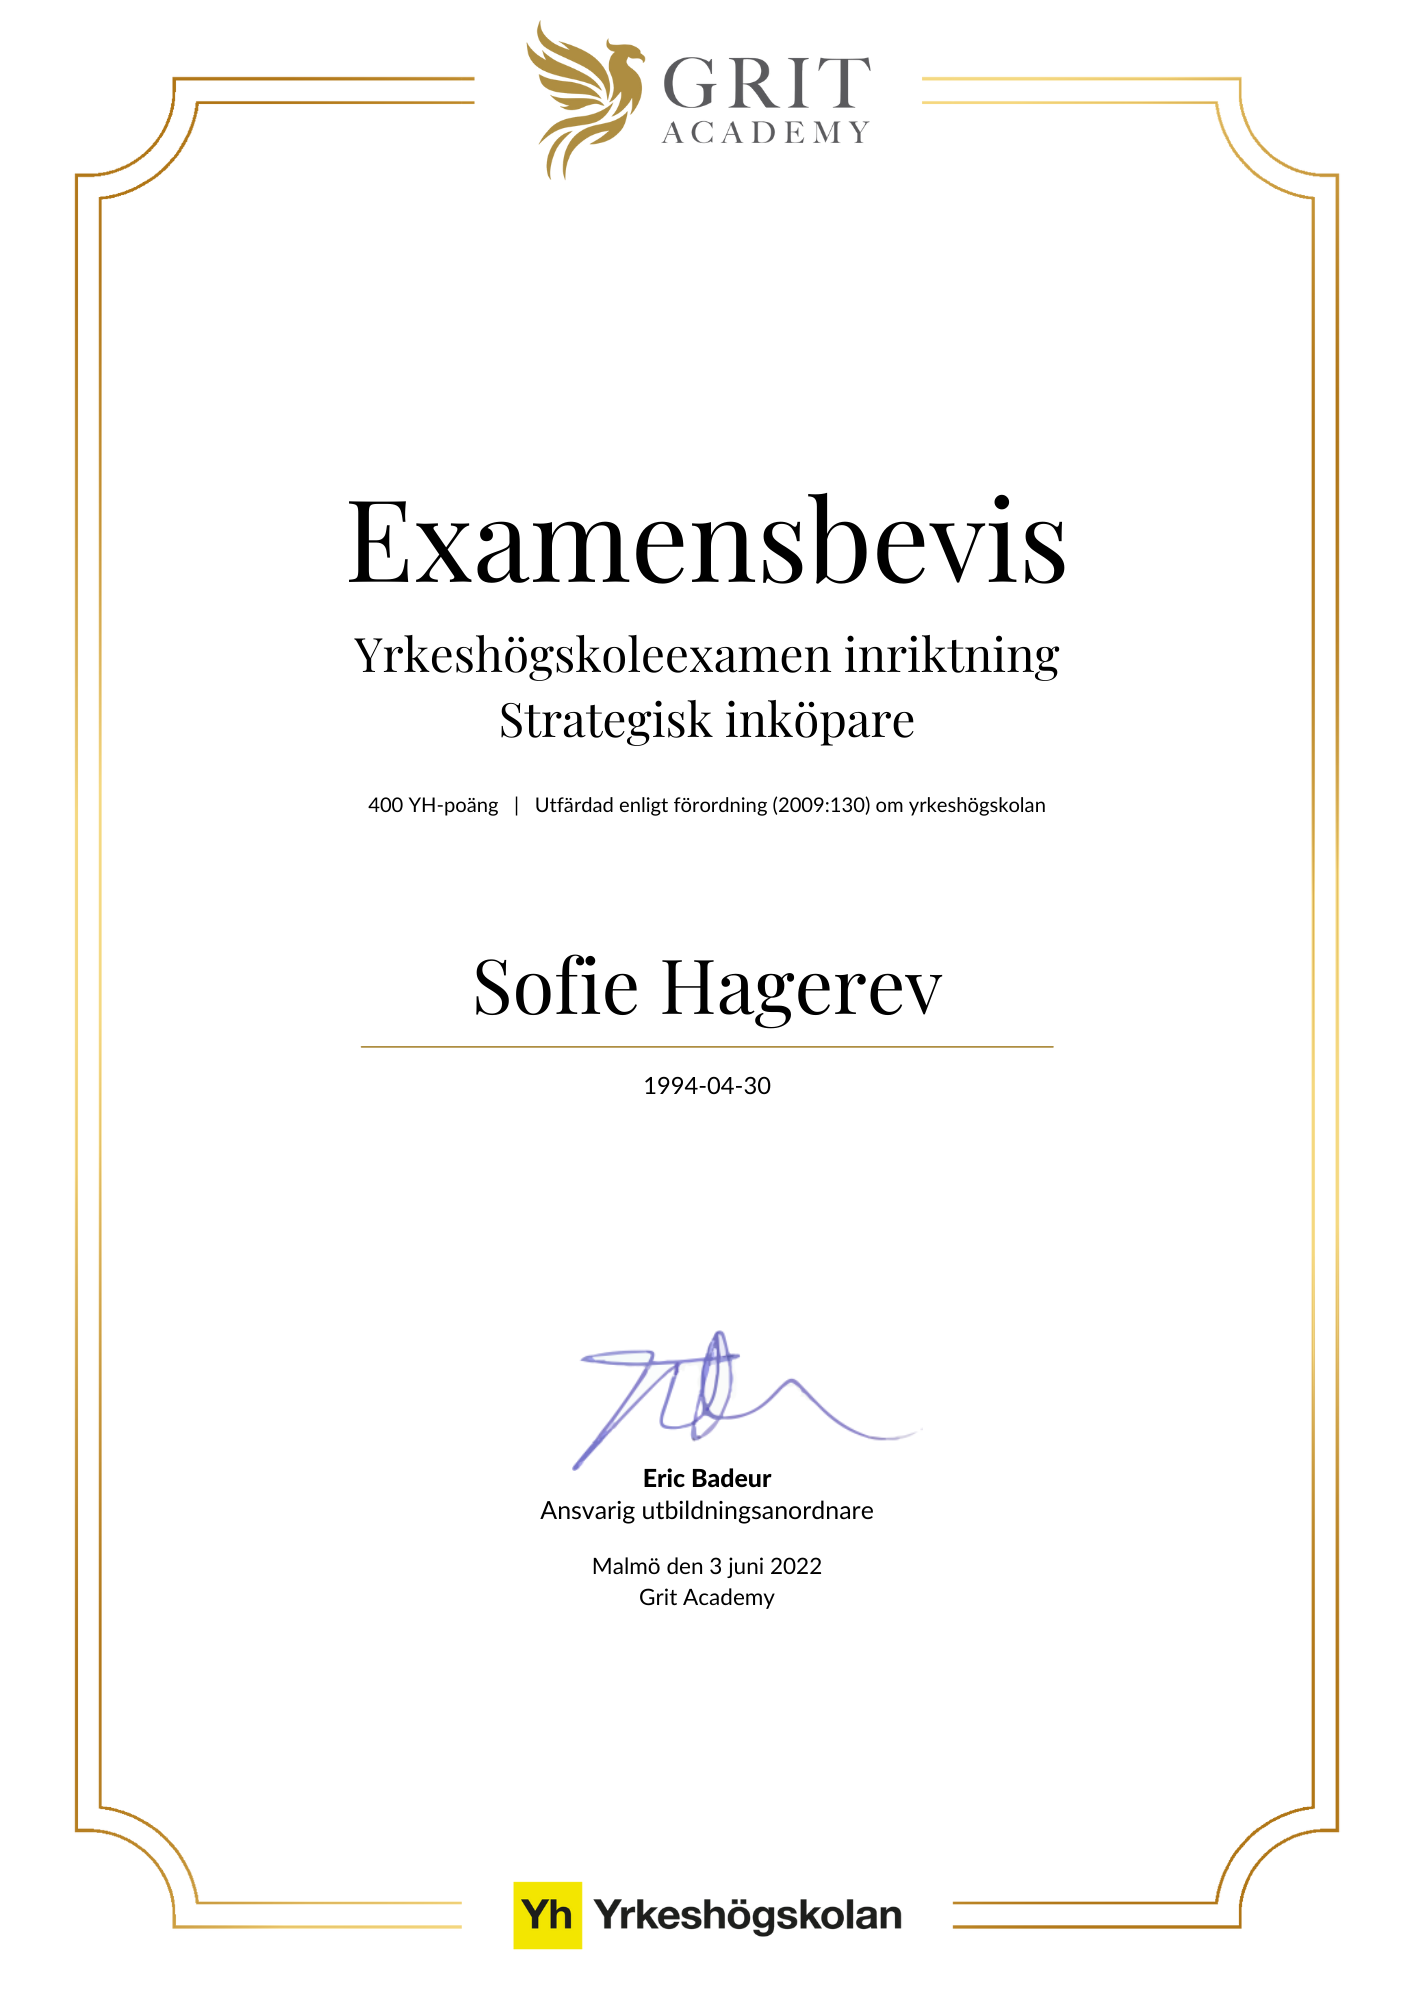 Examensbevis Sofie Hagerev - 1